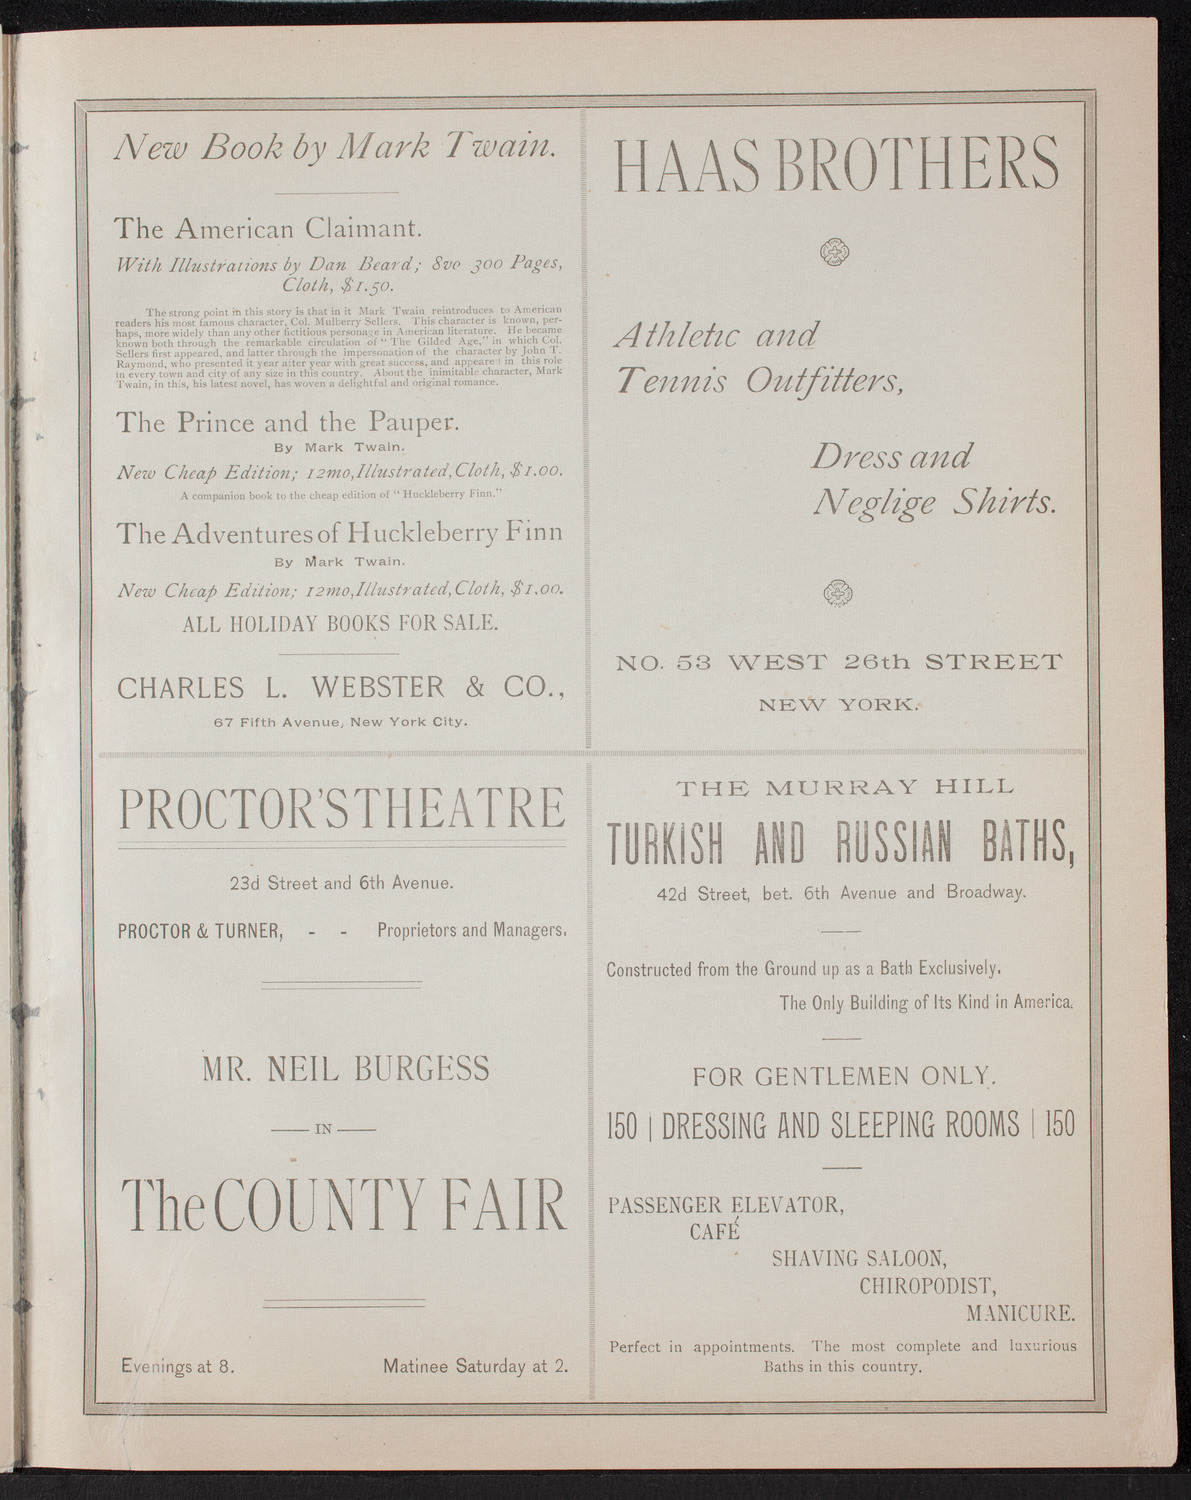 New York Athletic Club Minstrel Show, November 30, 1892, program page 15